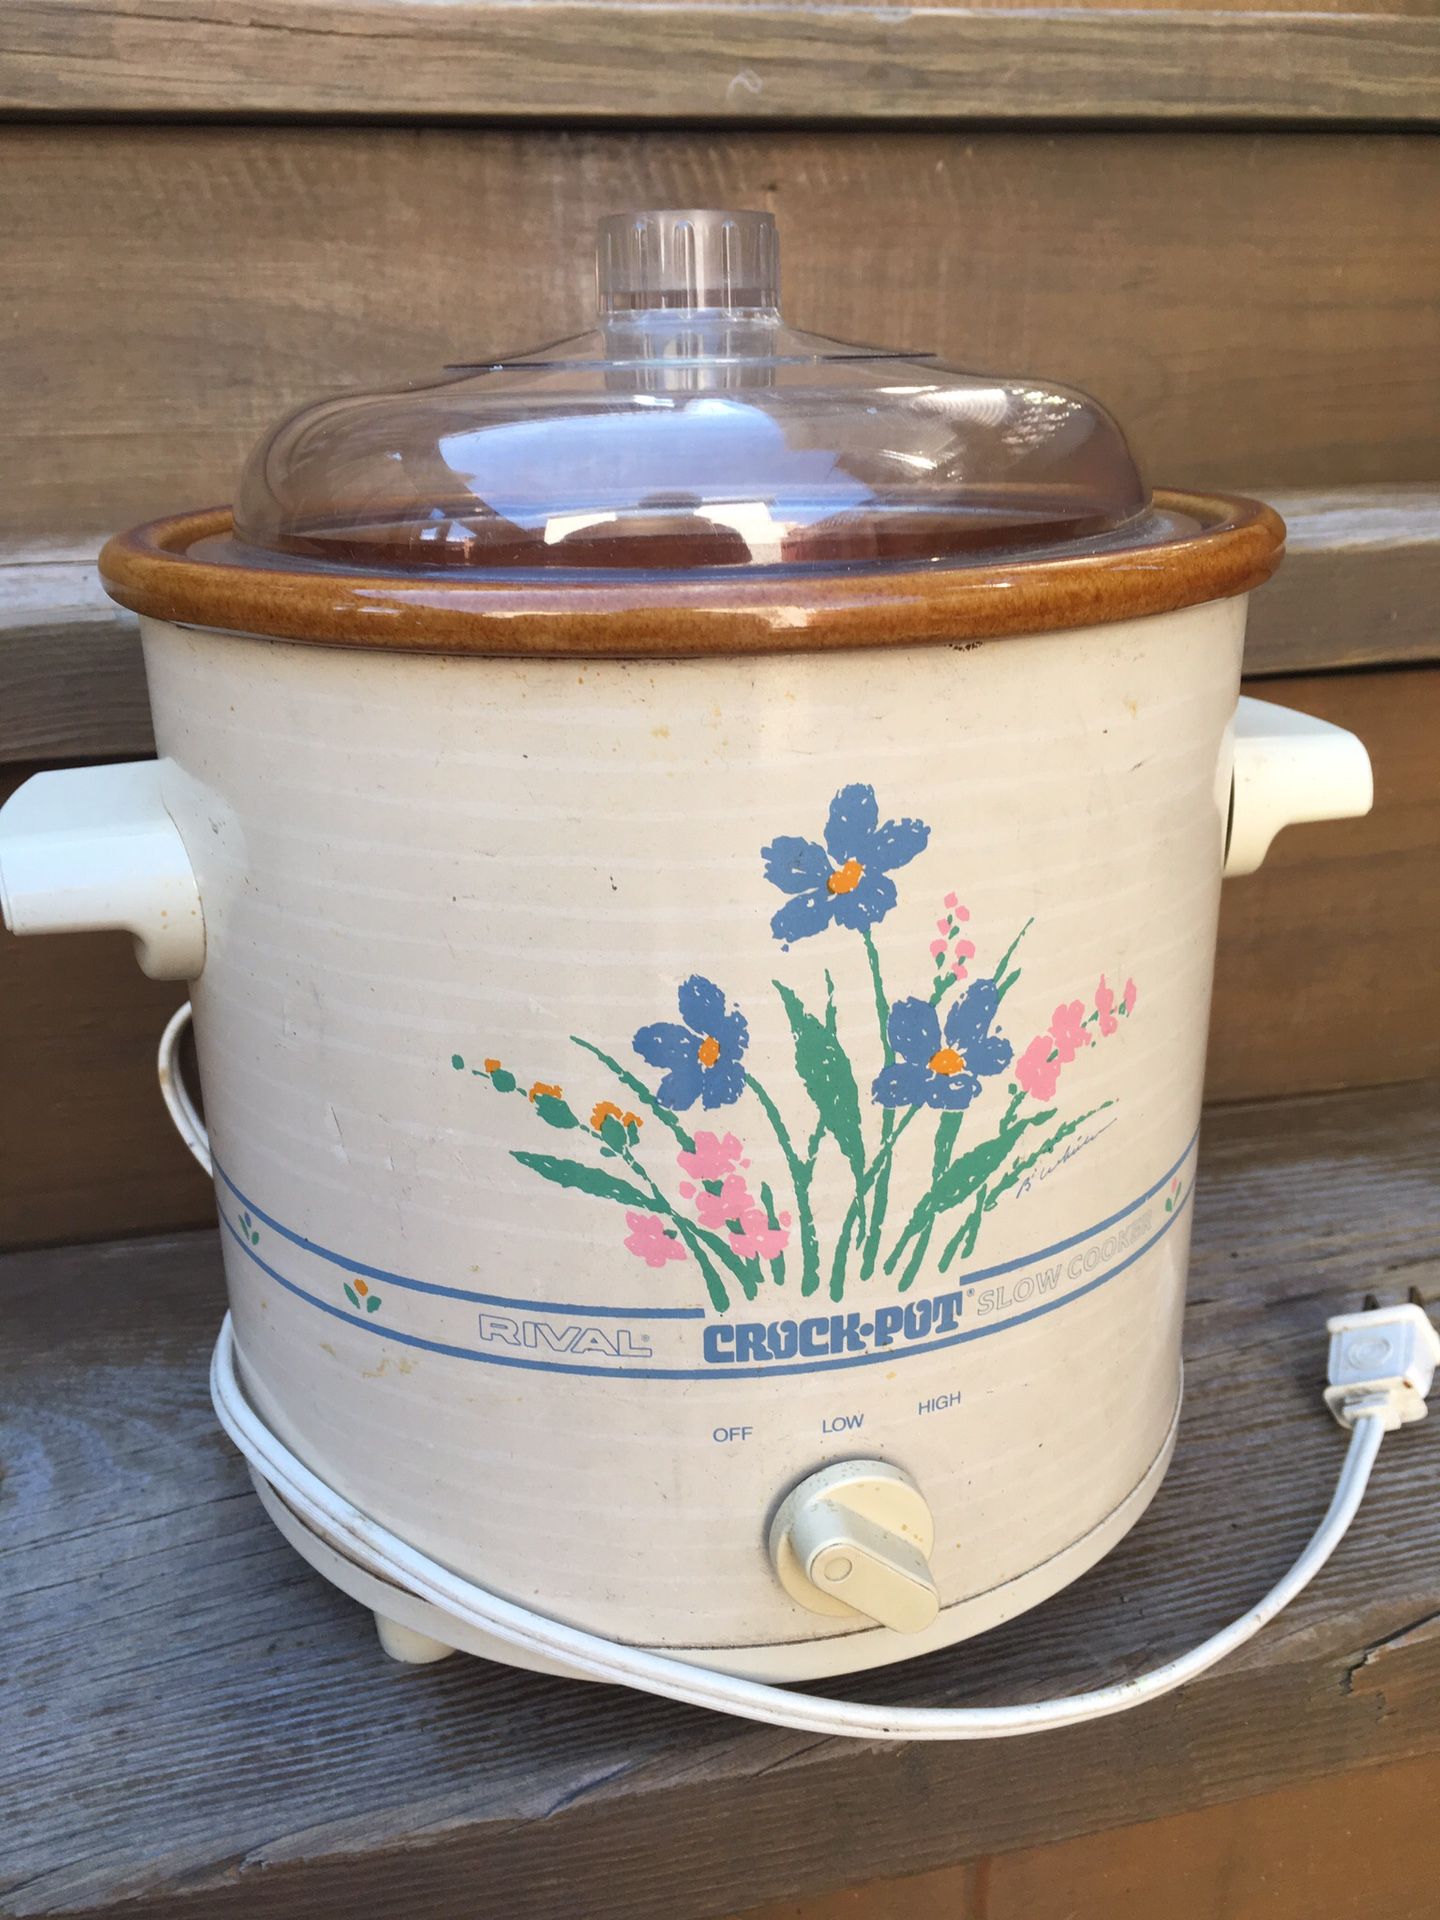 Vintage Rival Crock Pot - 3.5 Qt - Works Great